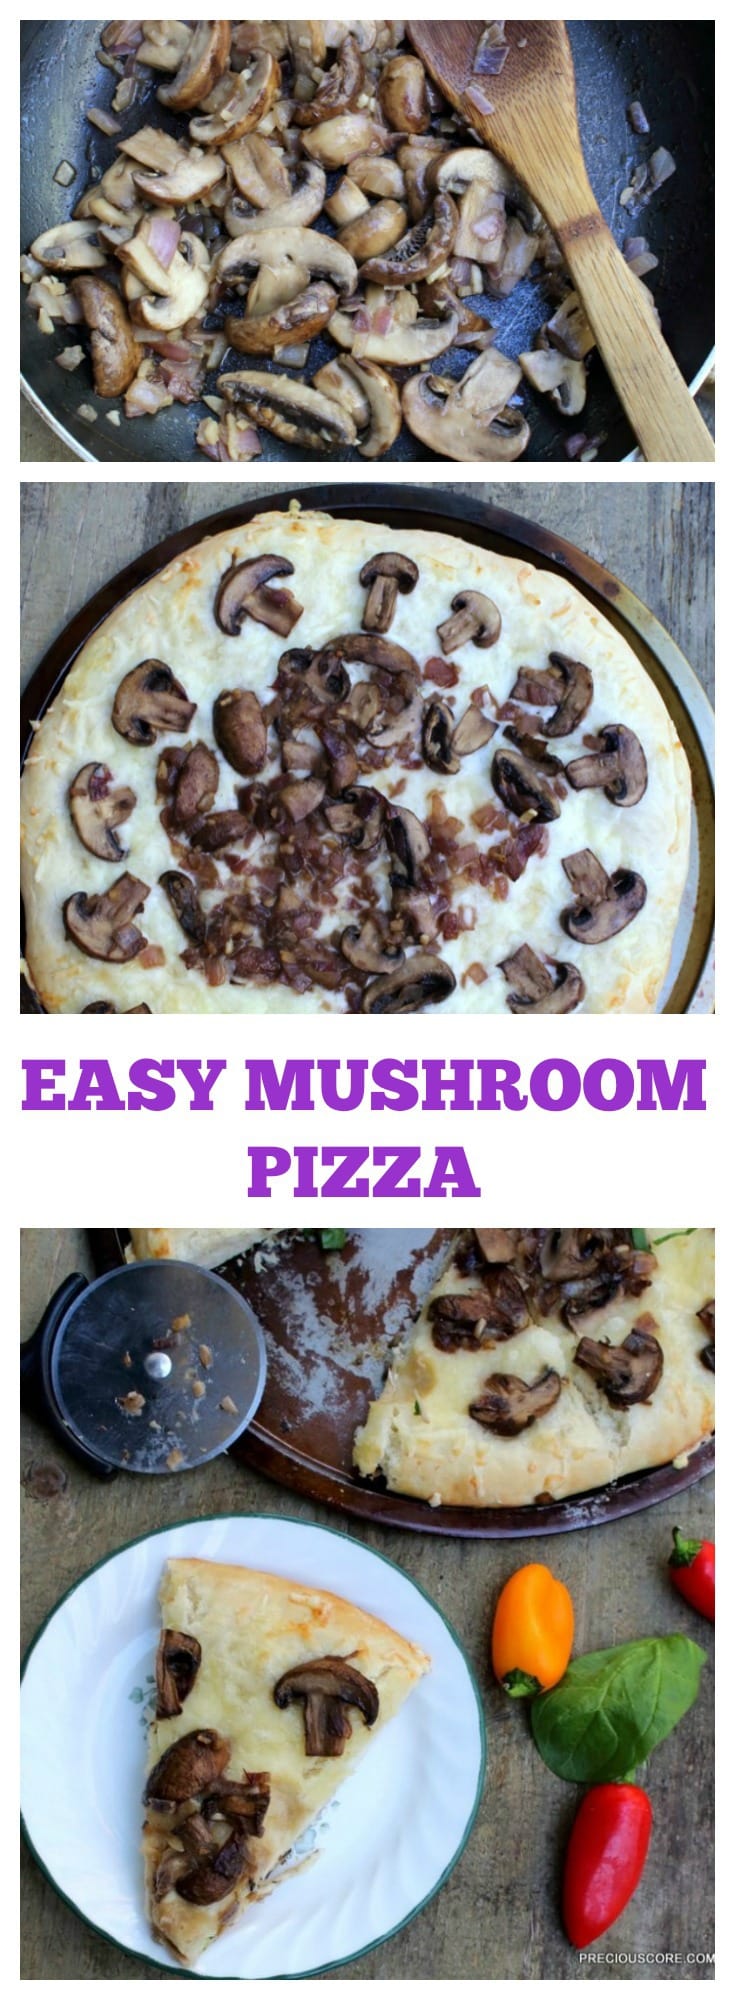 Super simple and delicious mushroom pizza recipe